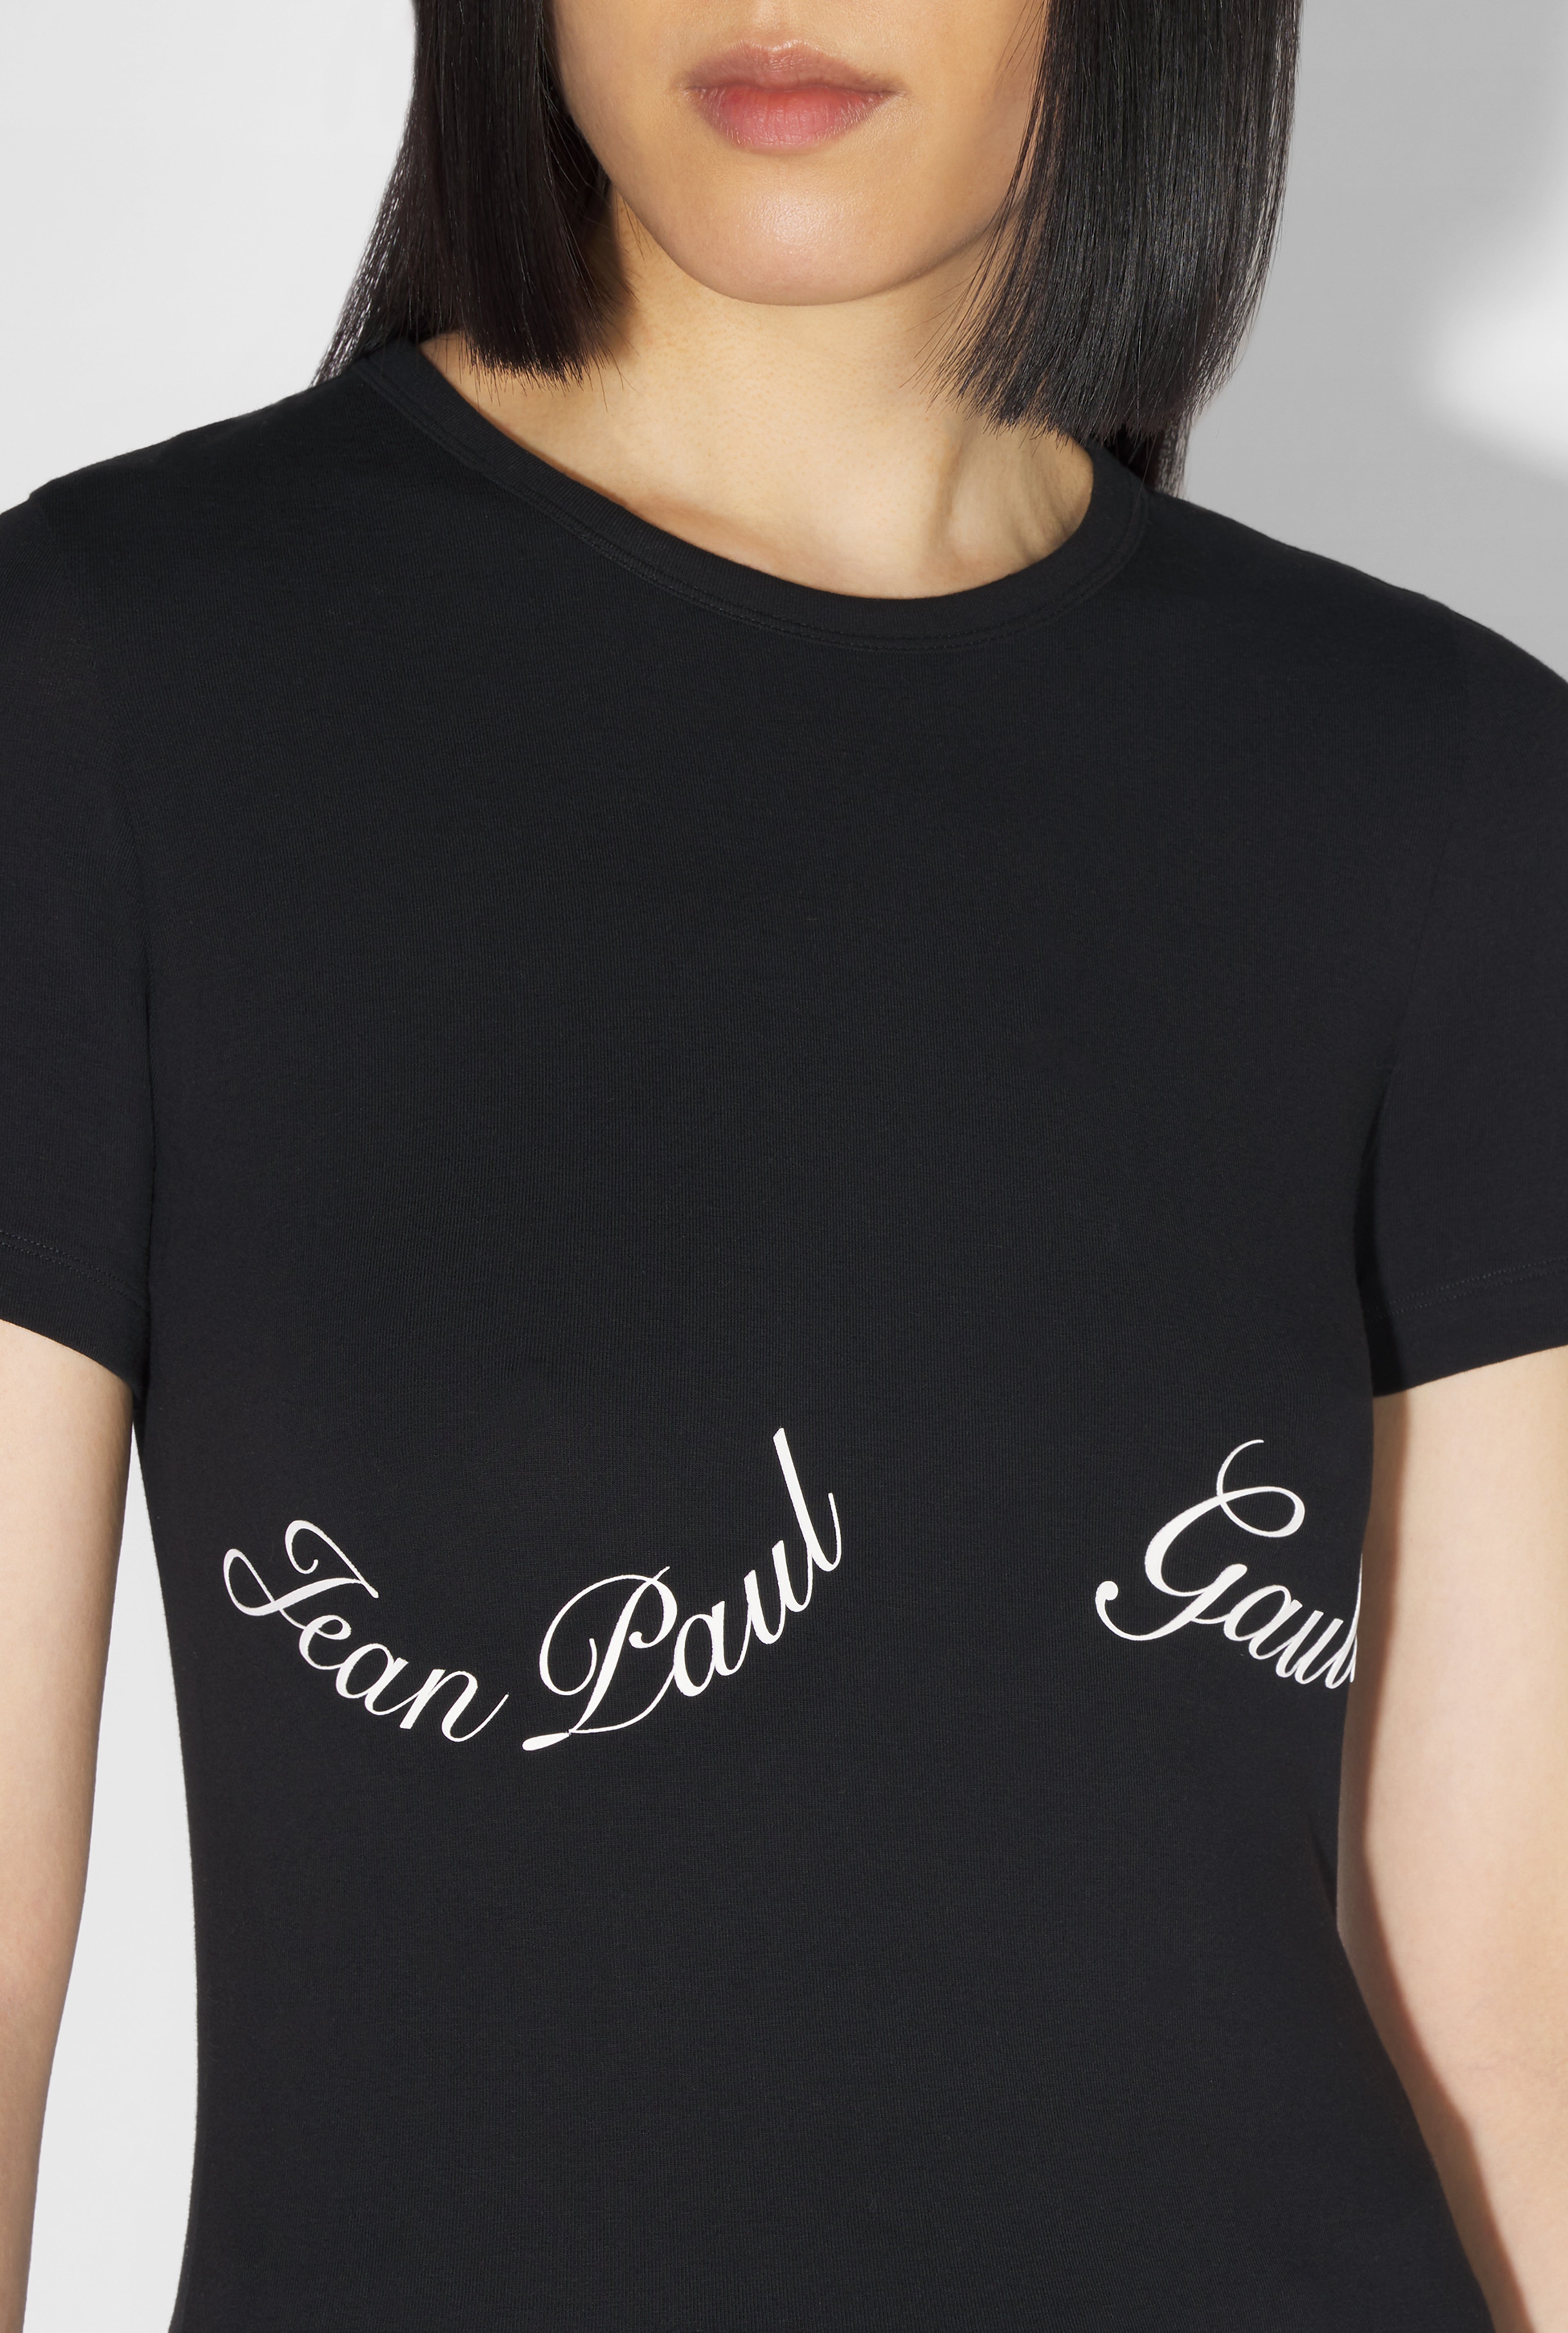 The Black Jean Paul Gaultier T-Shirt